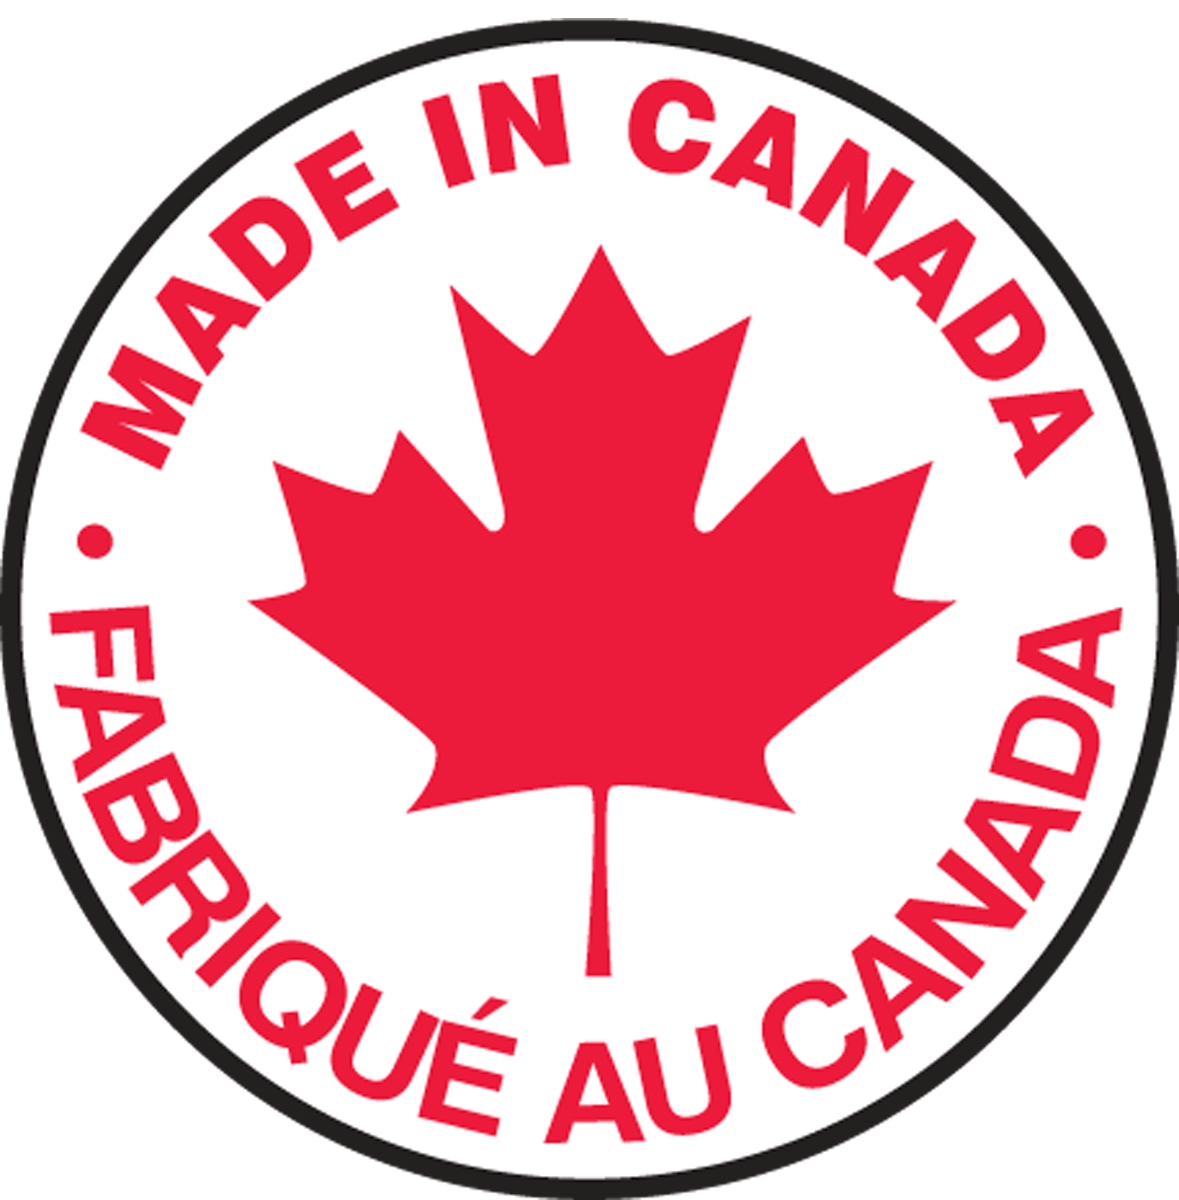 MADE IN CANADA (BILINGUAL FRENCH - FABRIQUÉ AU CANADA)